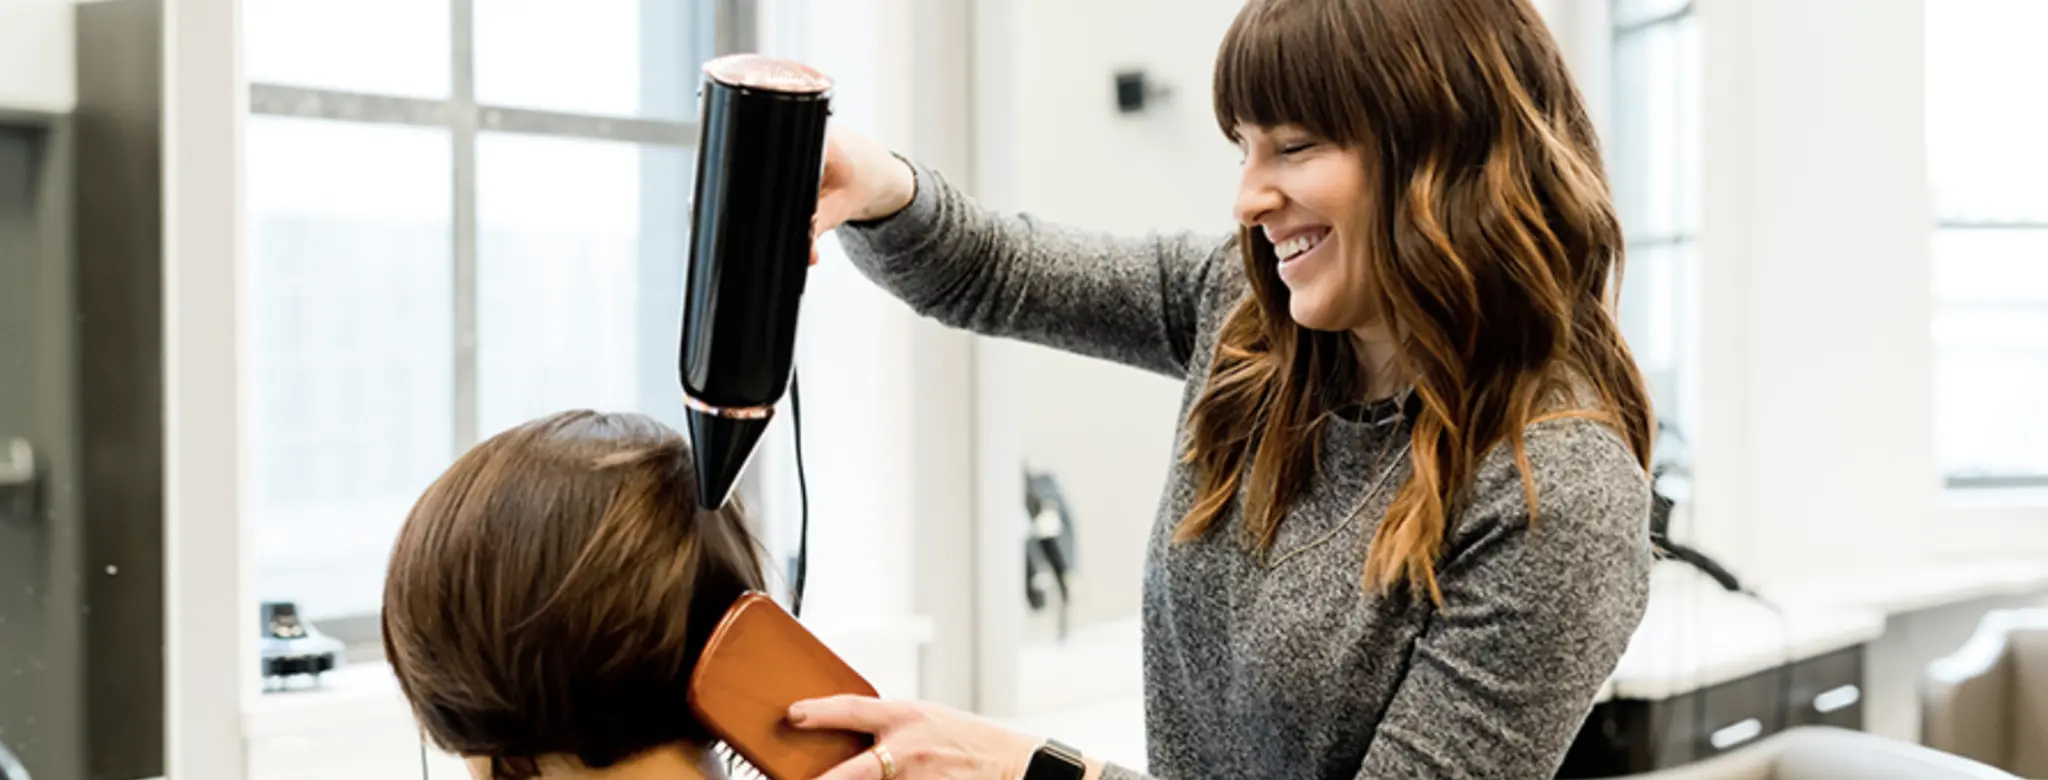 female hair stylist blow drying hair in salon